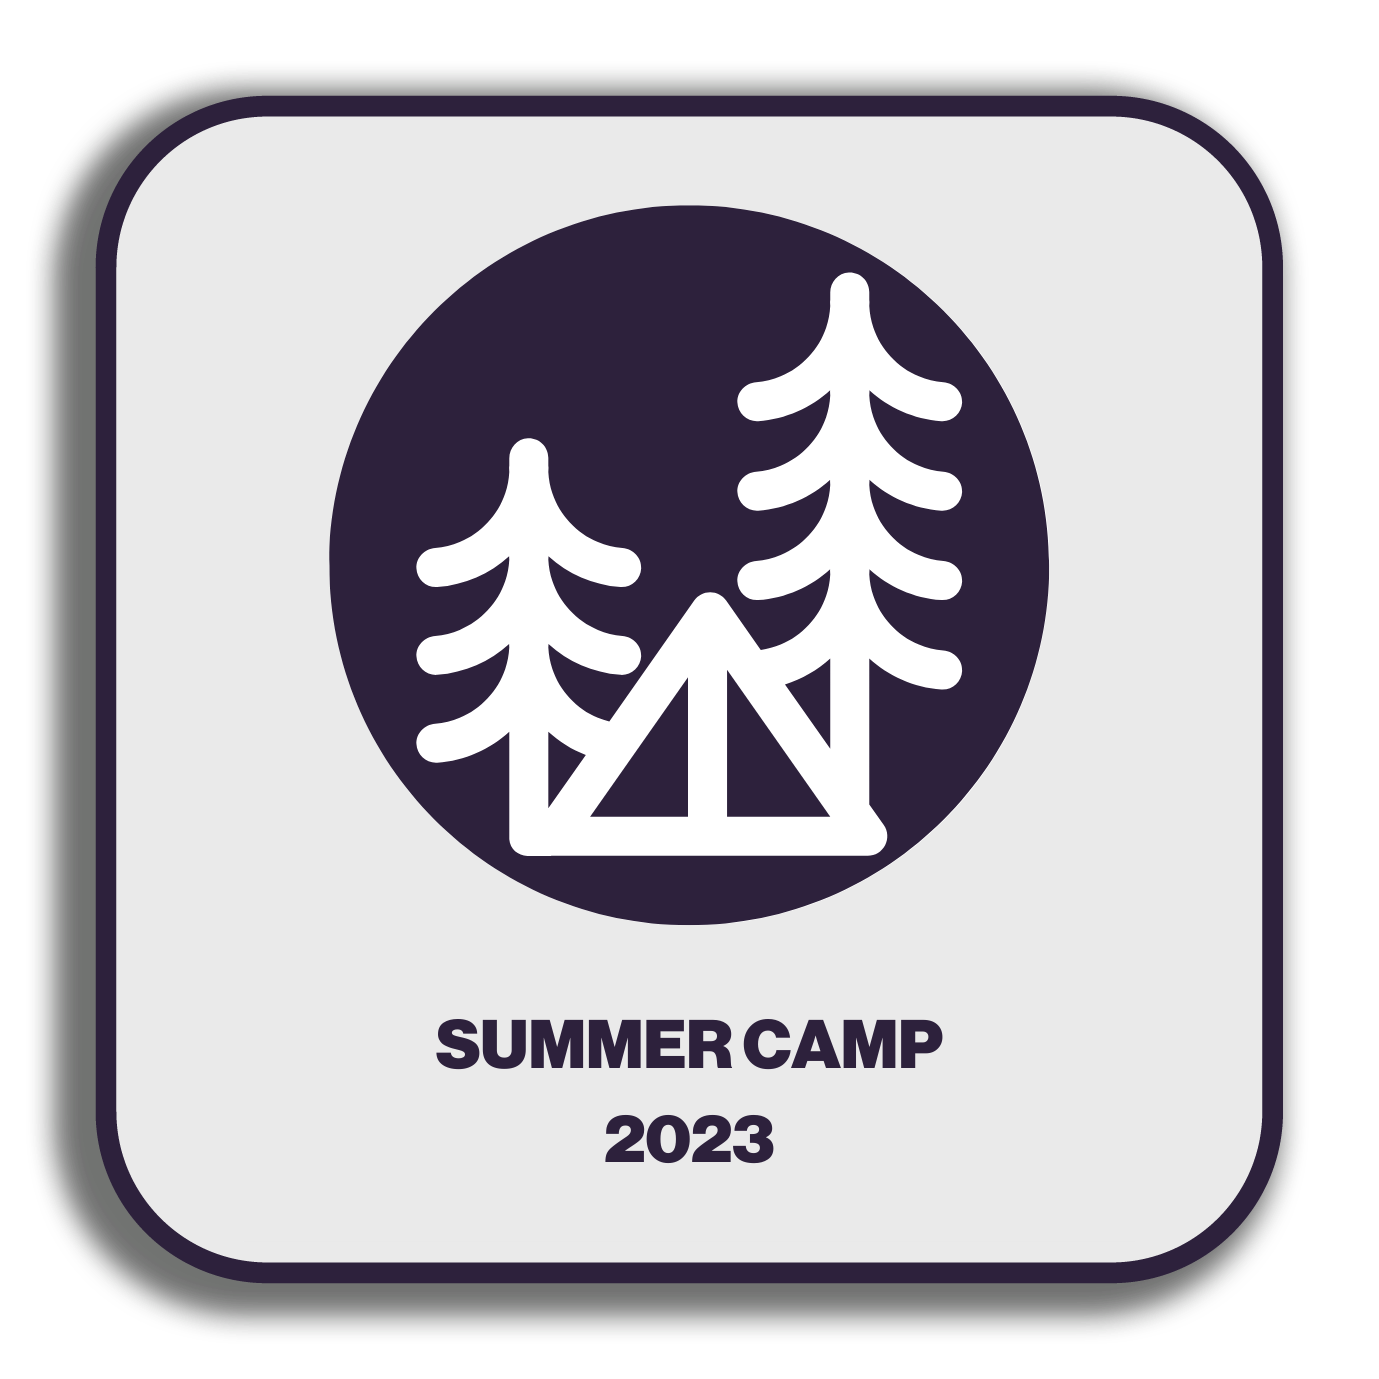 Summer Camp 2023 Information